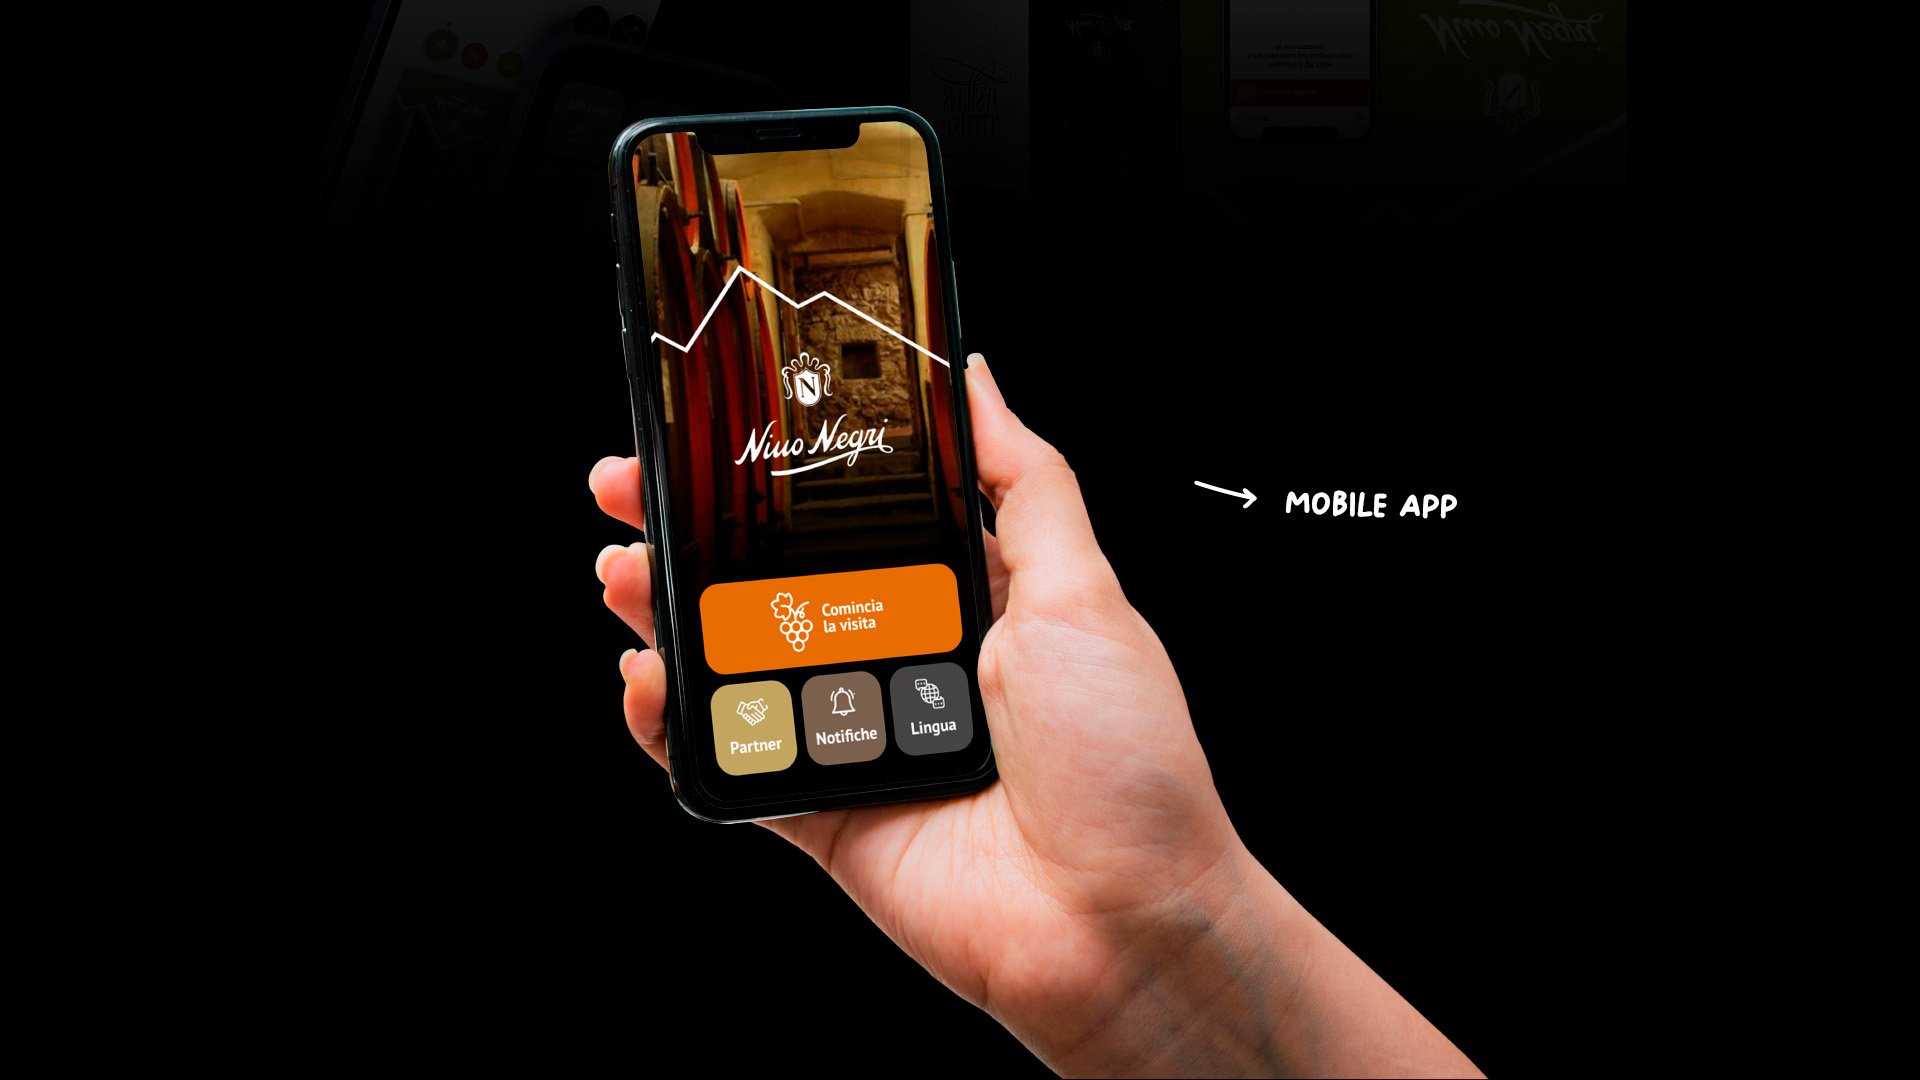 nino-negri-mobile-app